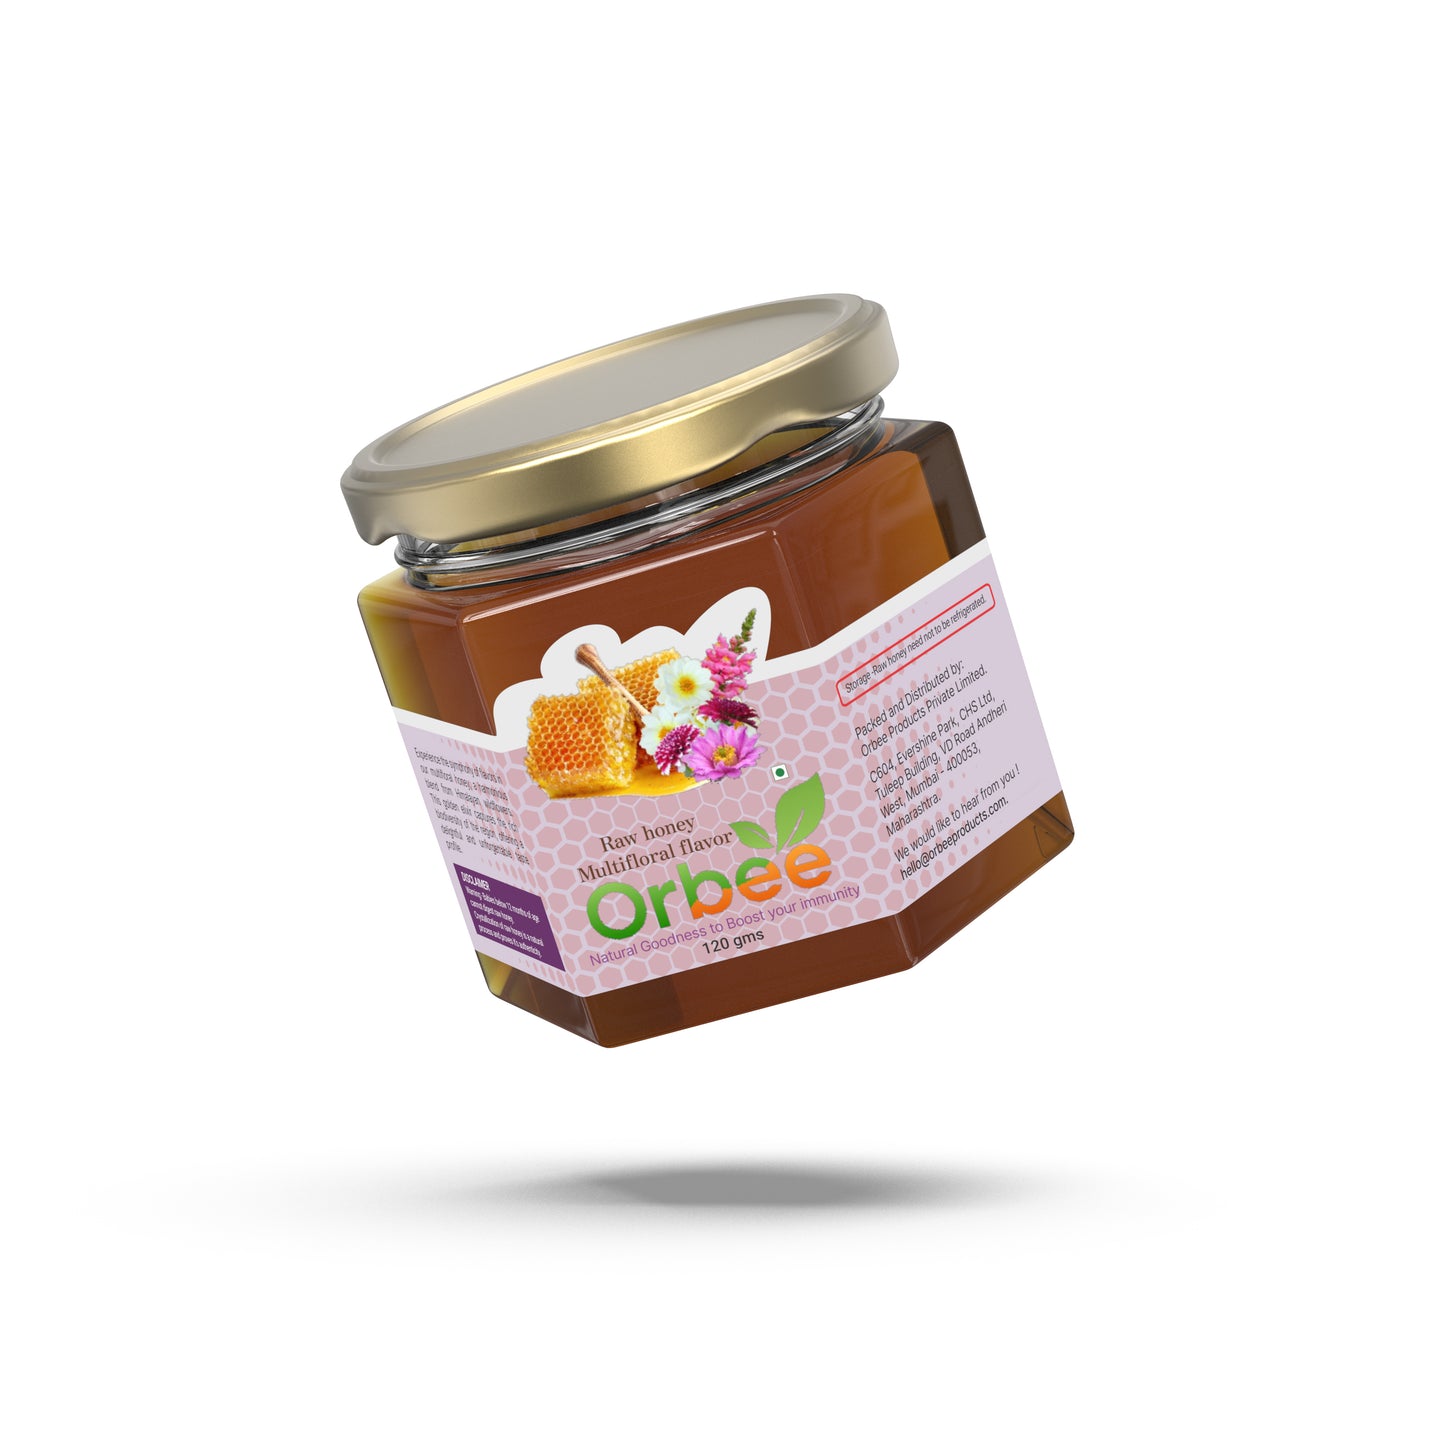 Raw Multifloral honey